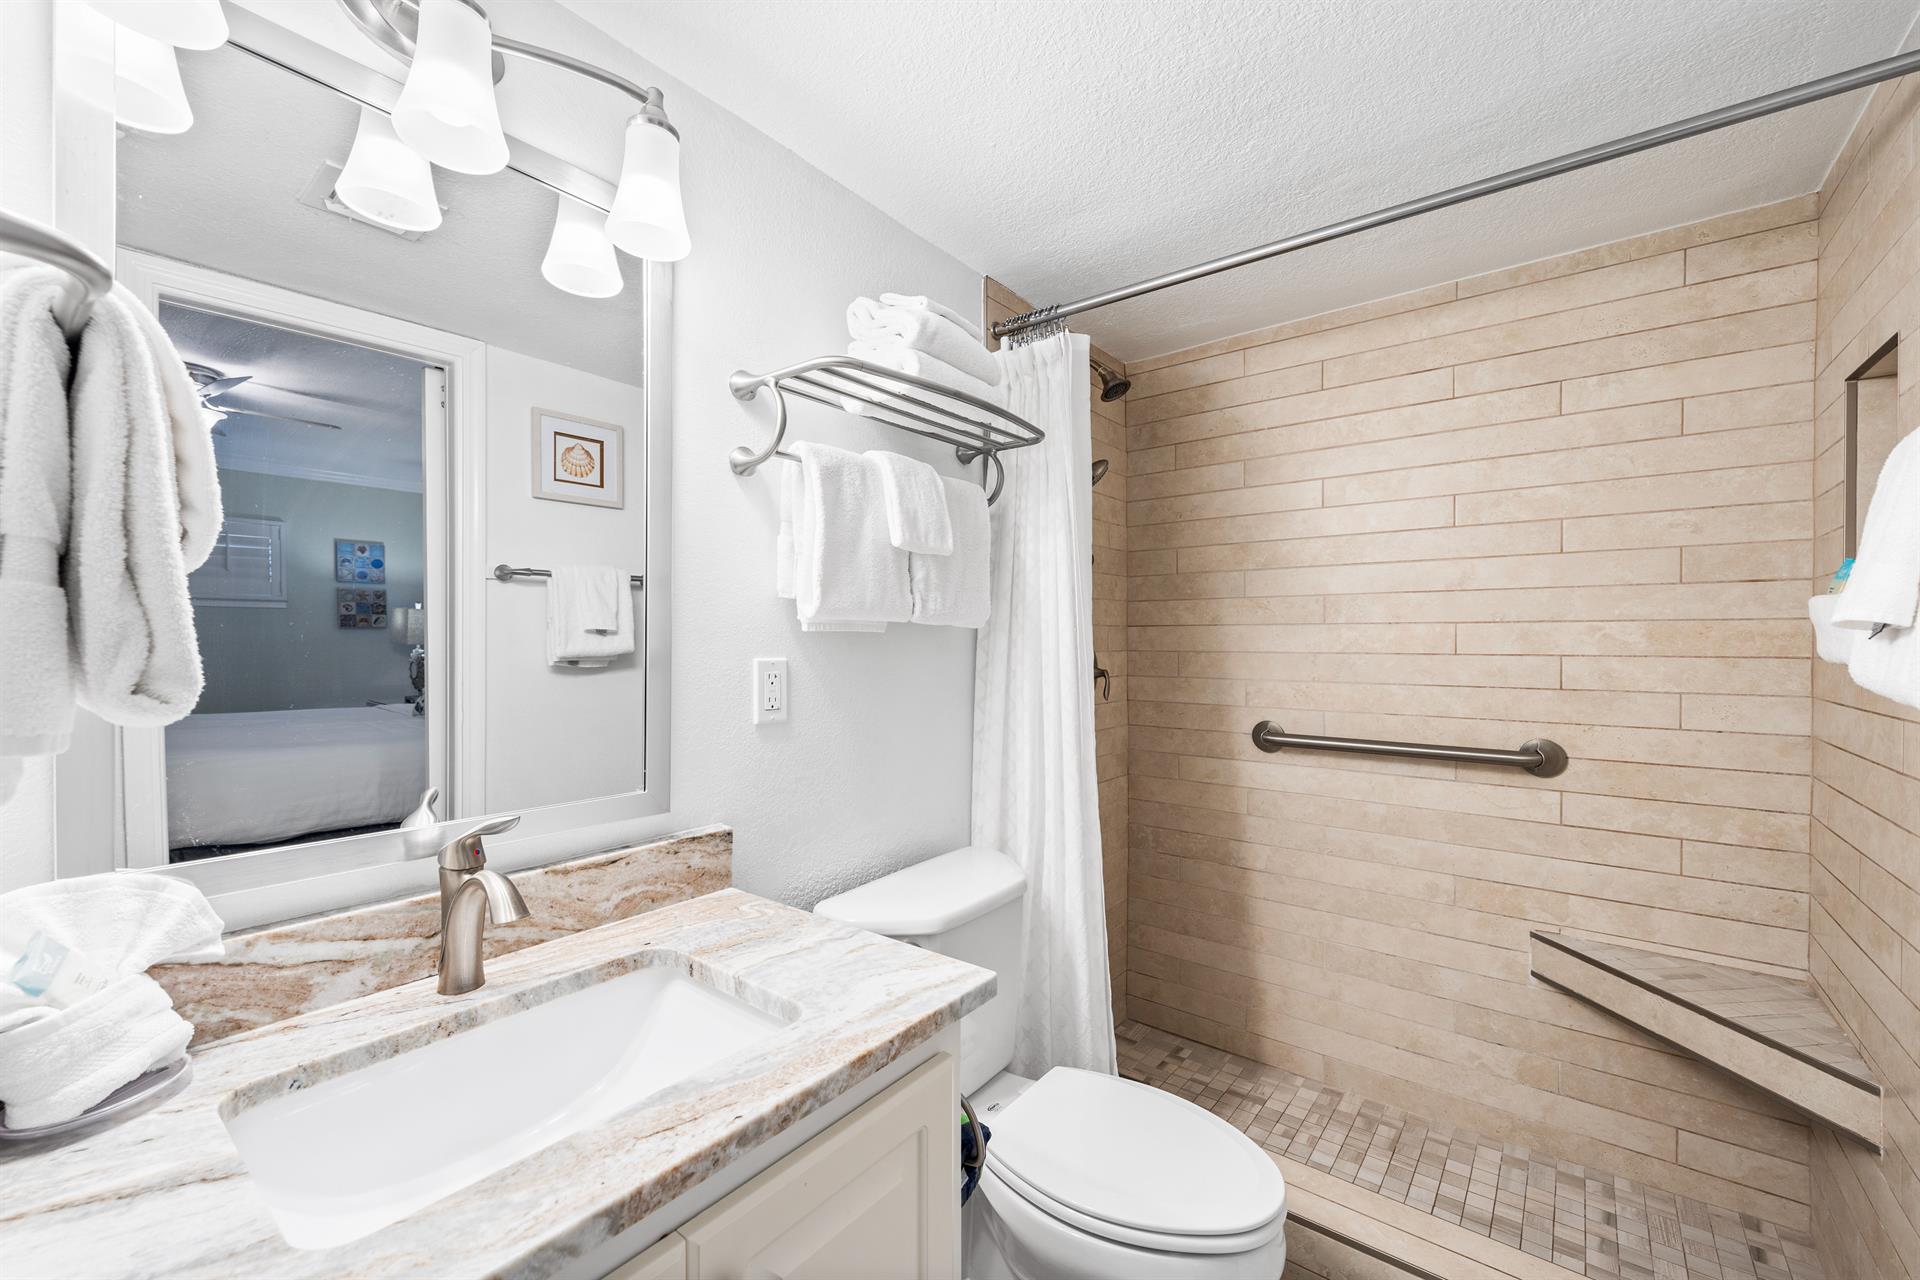 HSRC 316 Bathroom With WalkIn Shower